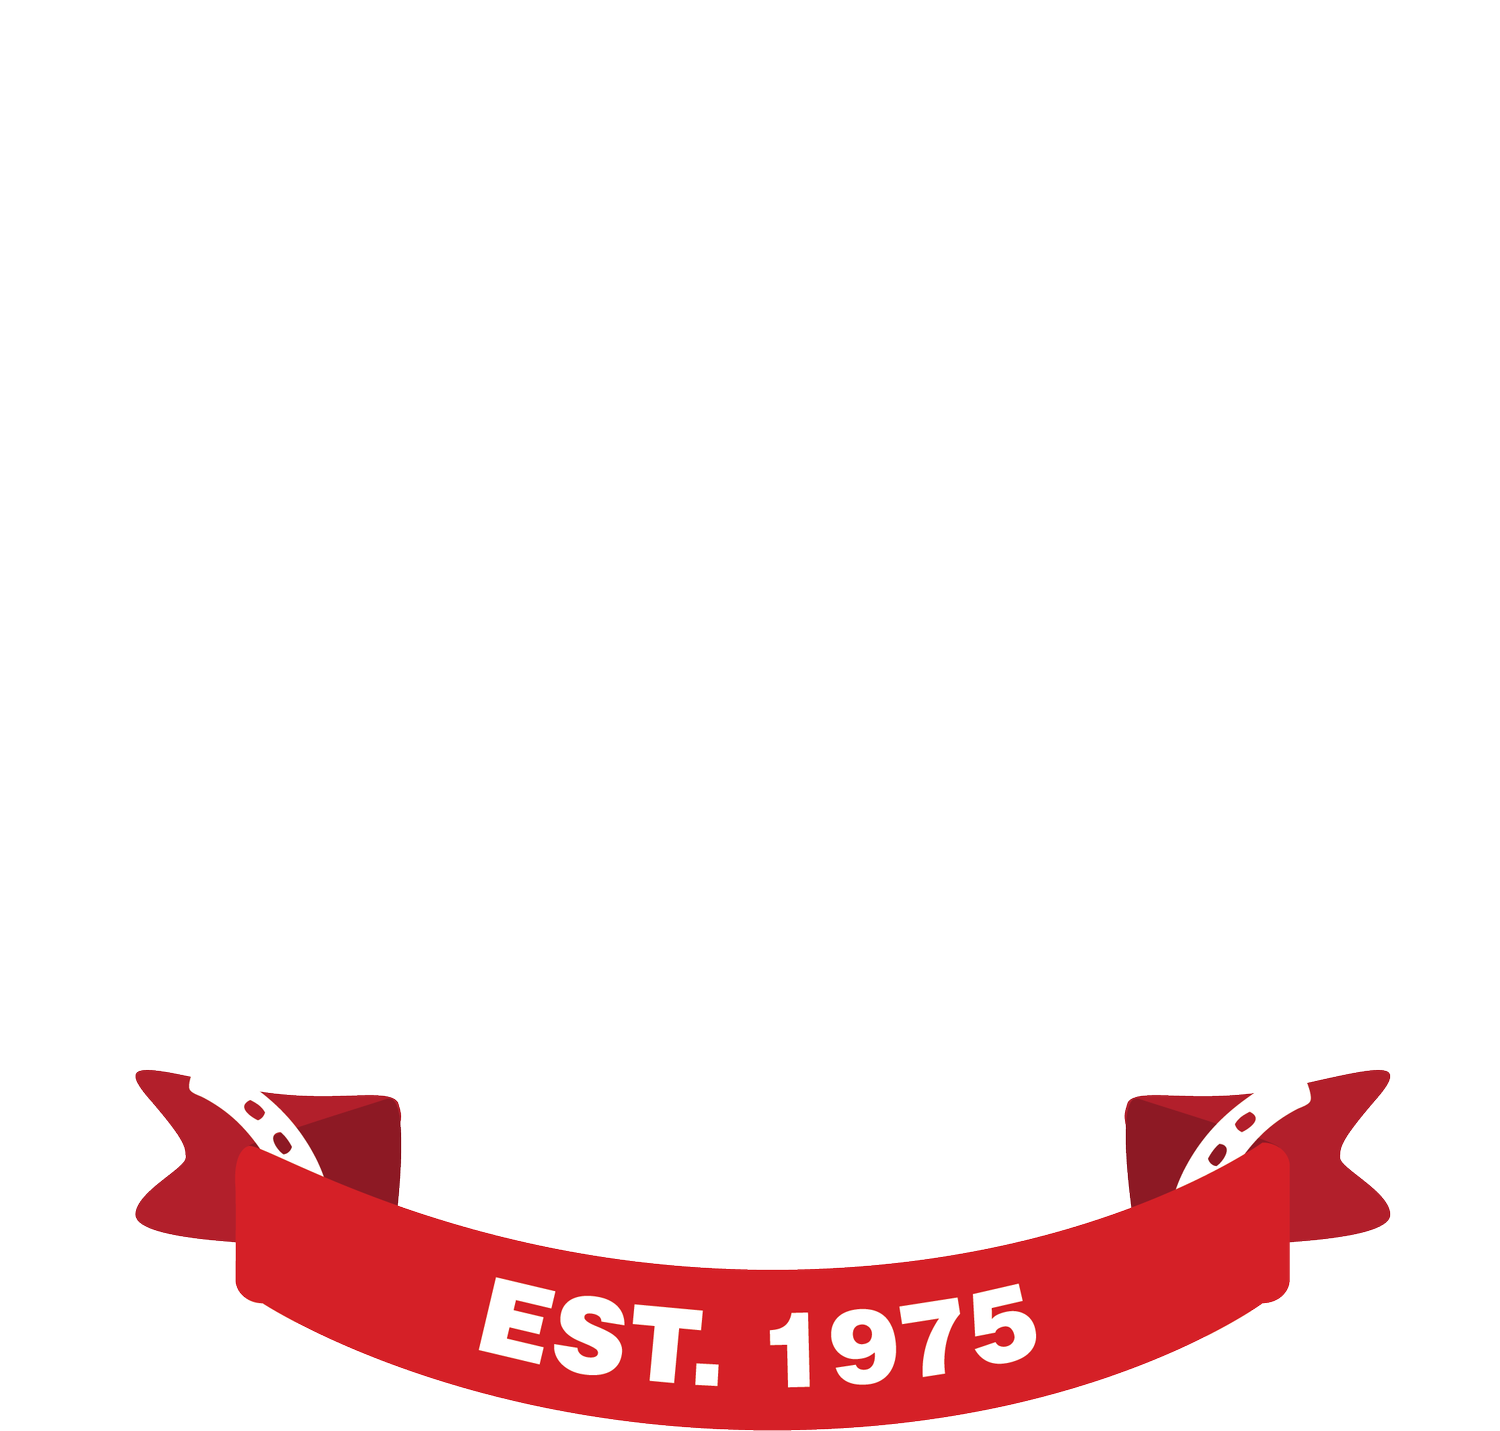 Sebastian Riding Associates